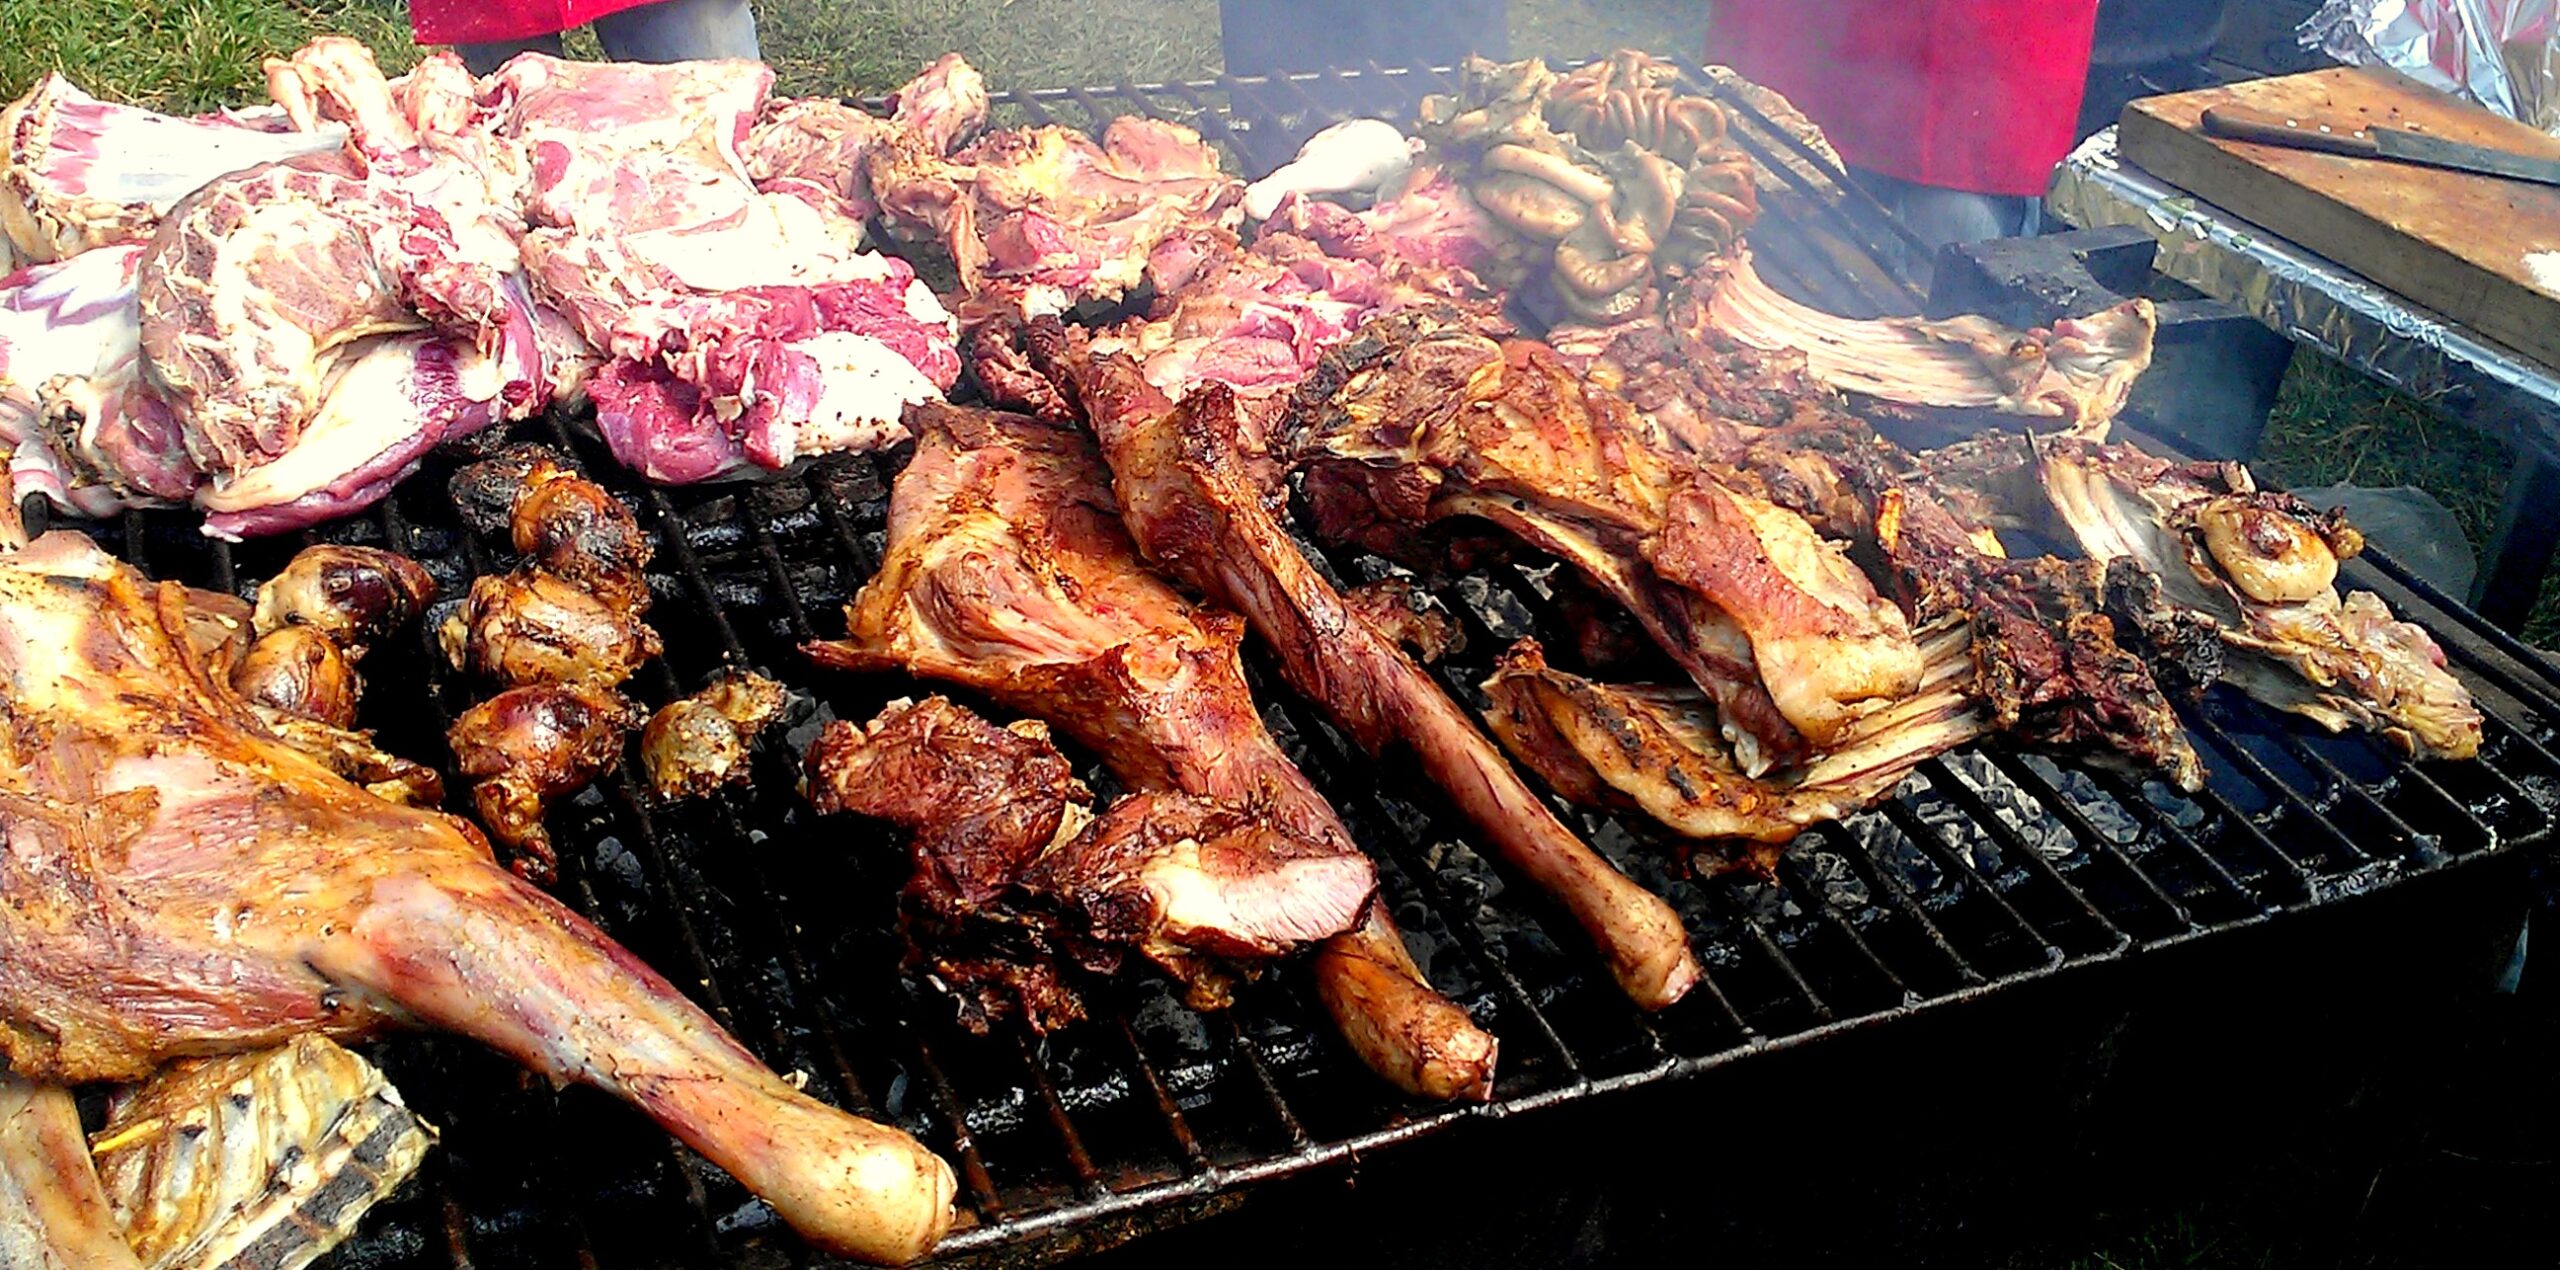 Roasted meat in Kenya nyama choma